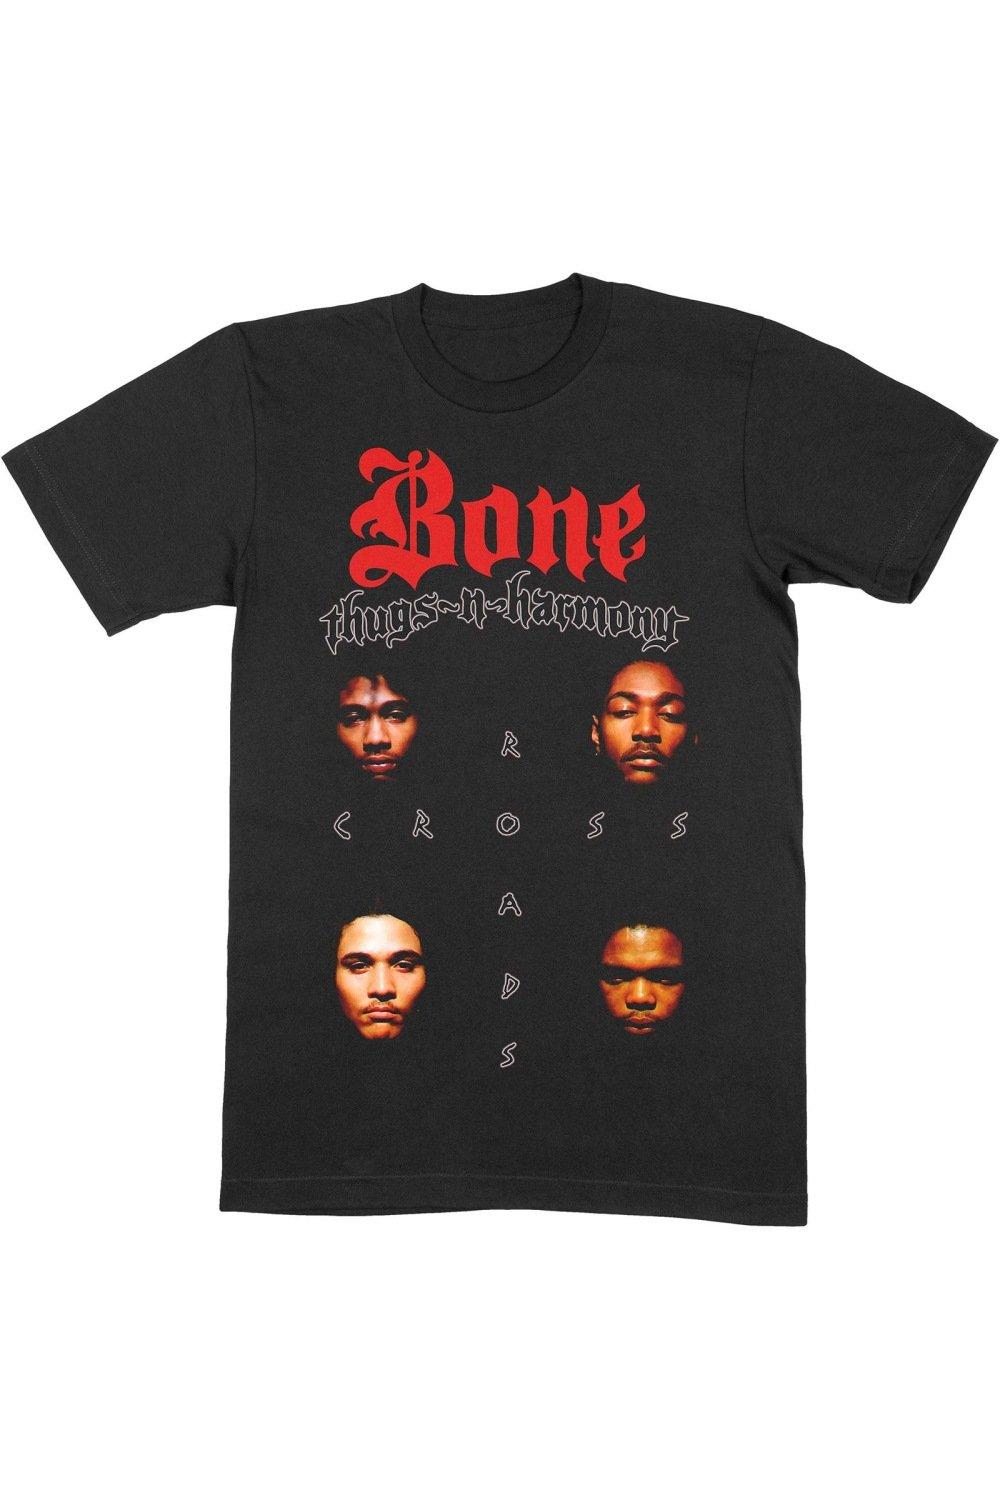 bone thugs n harmony thug world order Хлопковая футболка Crossroads Bone Thugs N Harmony, черный